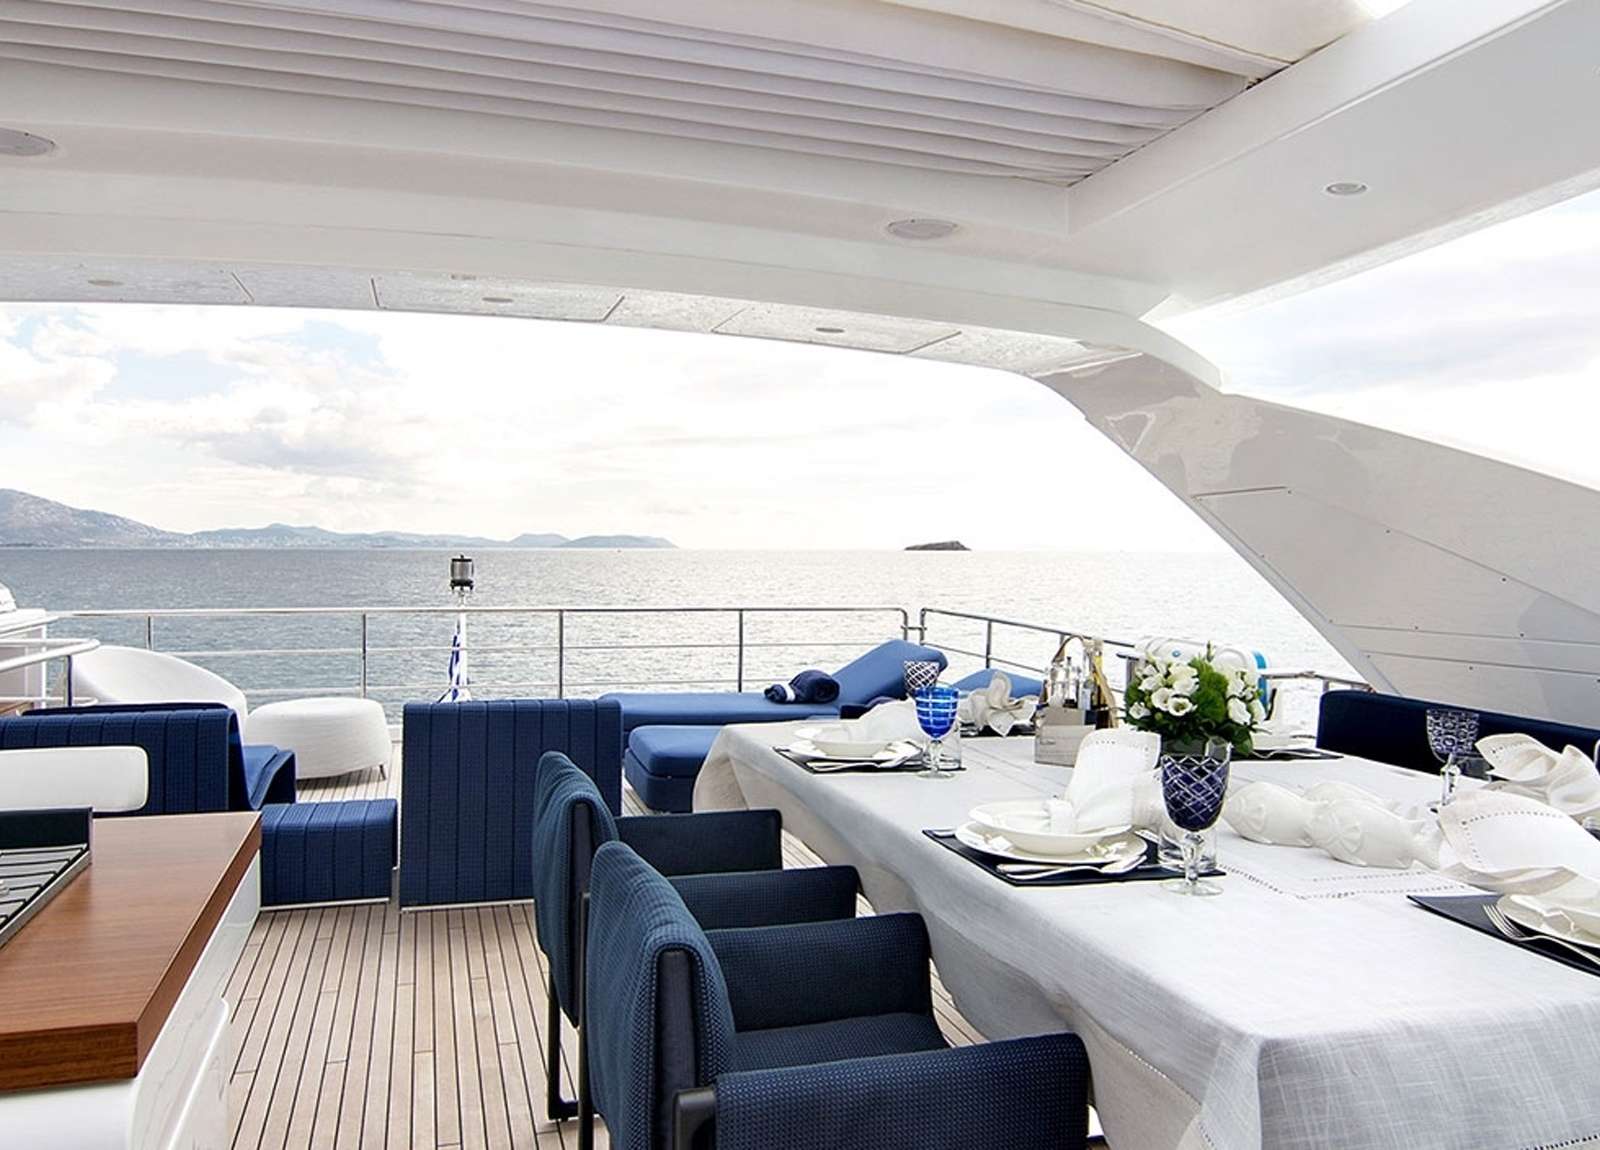 Upperdeck seating Luxury Yacht azimut 95 memories too